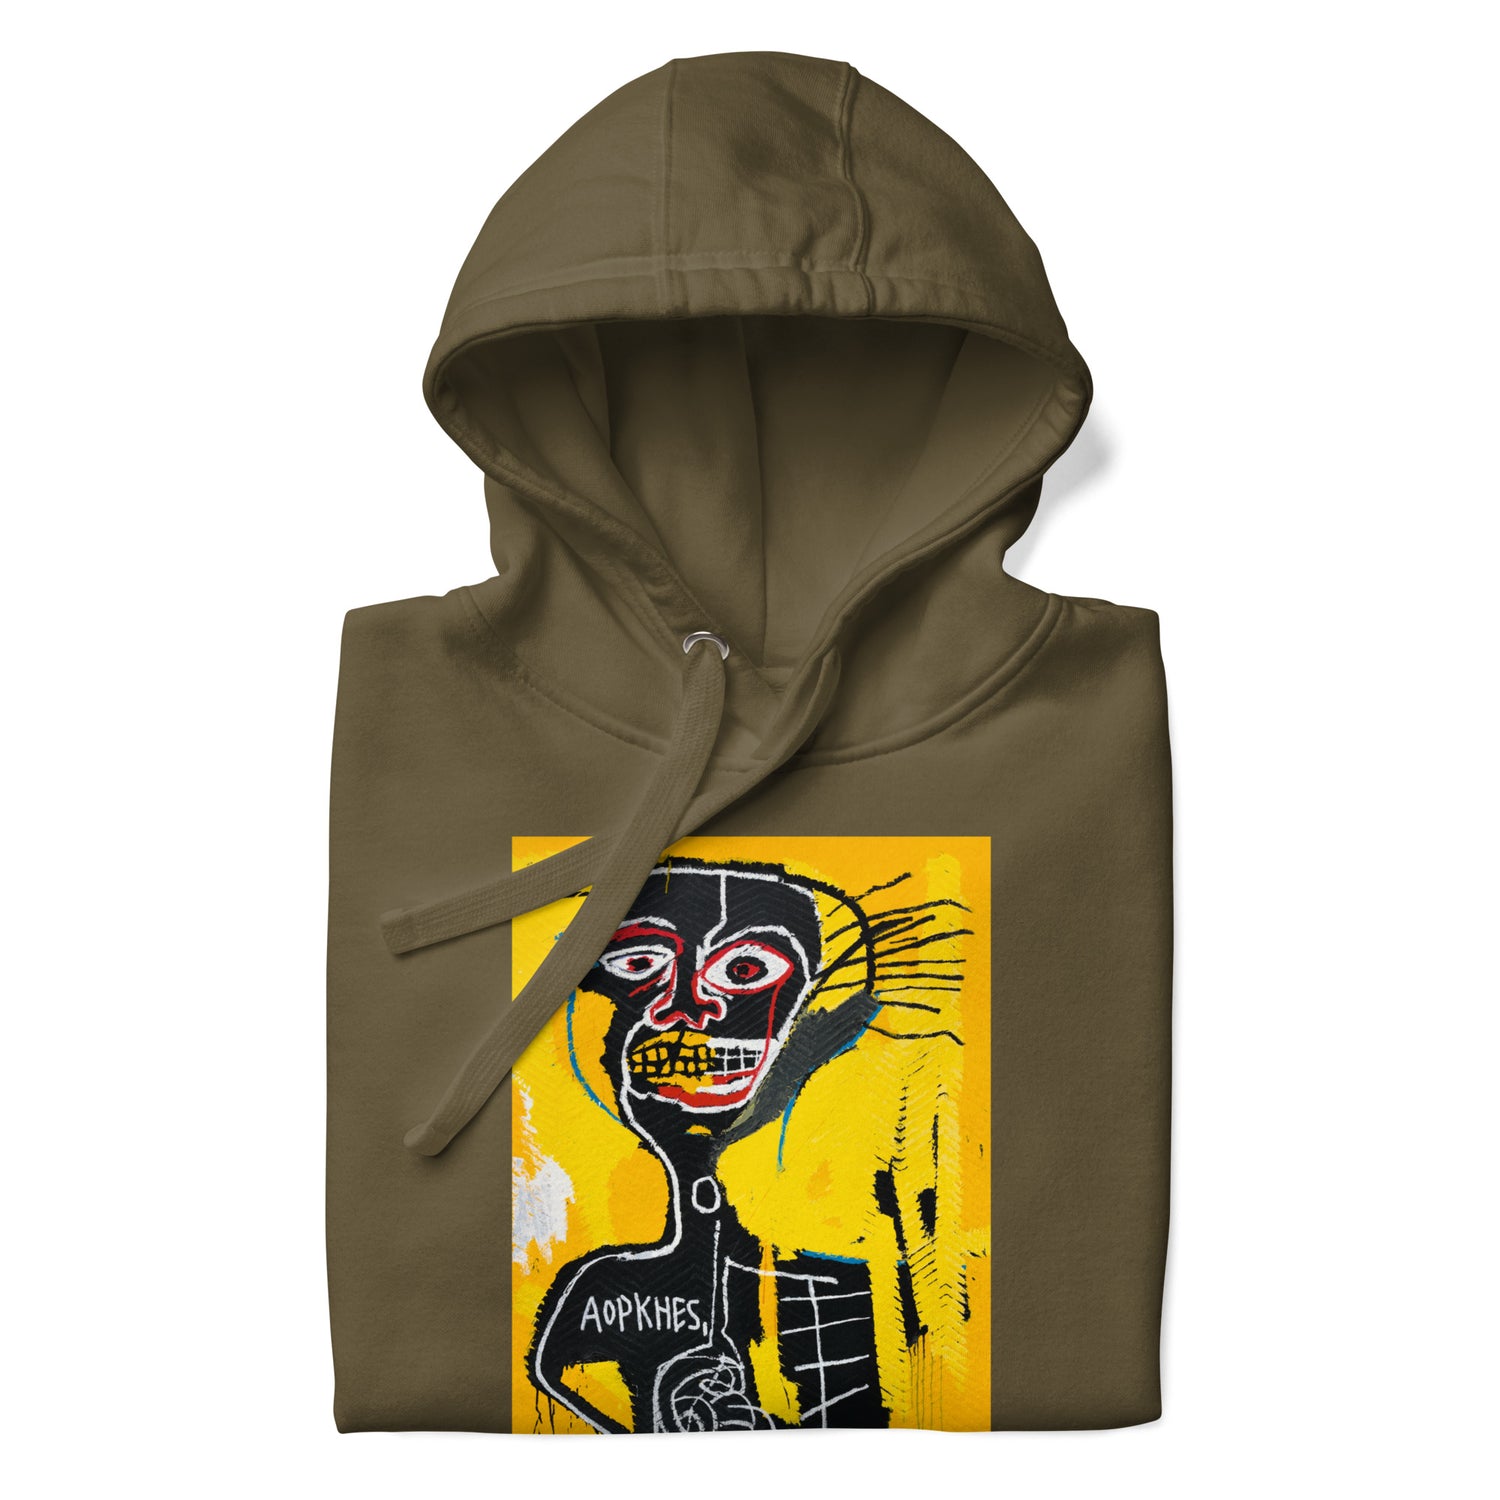 Jean-Michel Basquiat "Cabeza" Artwork Printed Premium Streetwear Sweatshirt Hoodie Olive Green